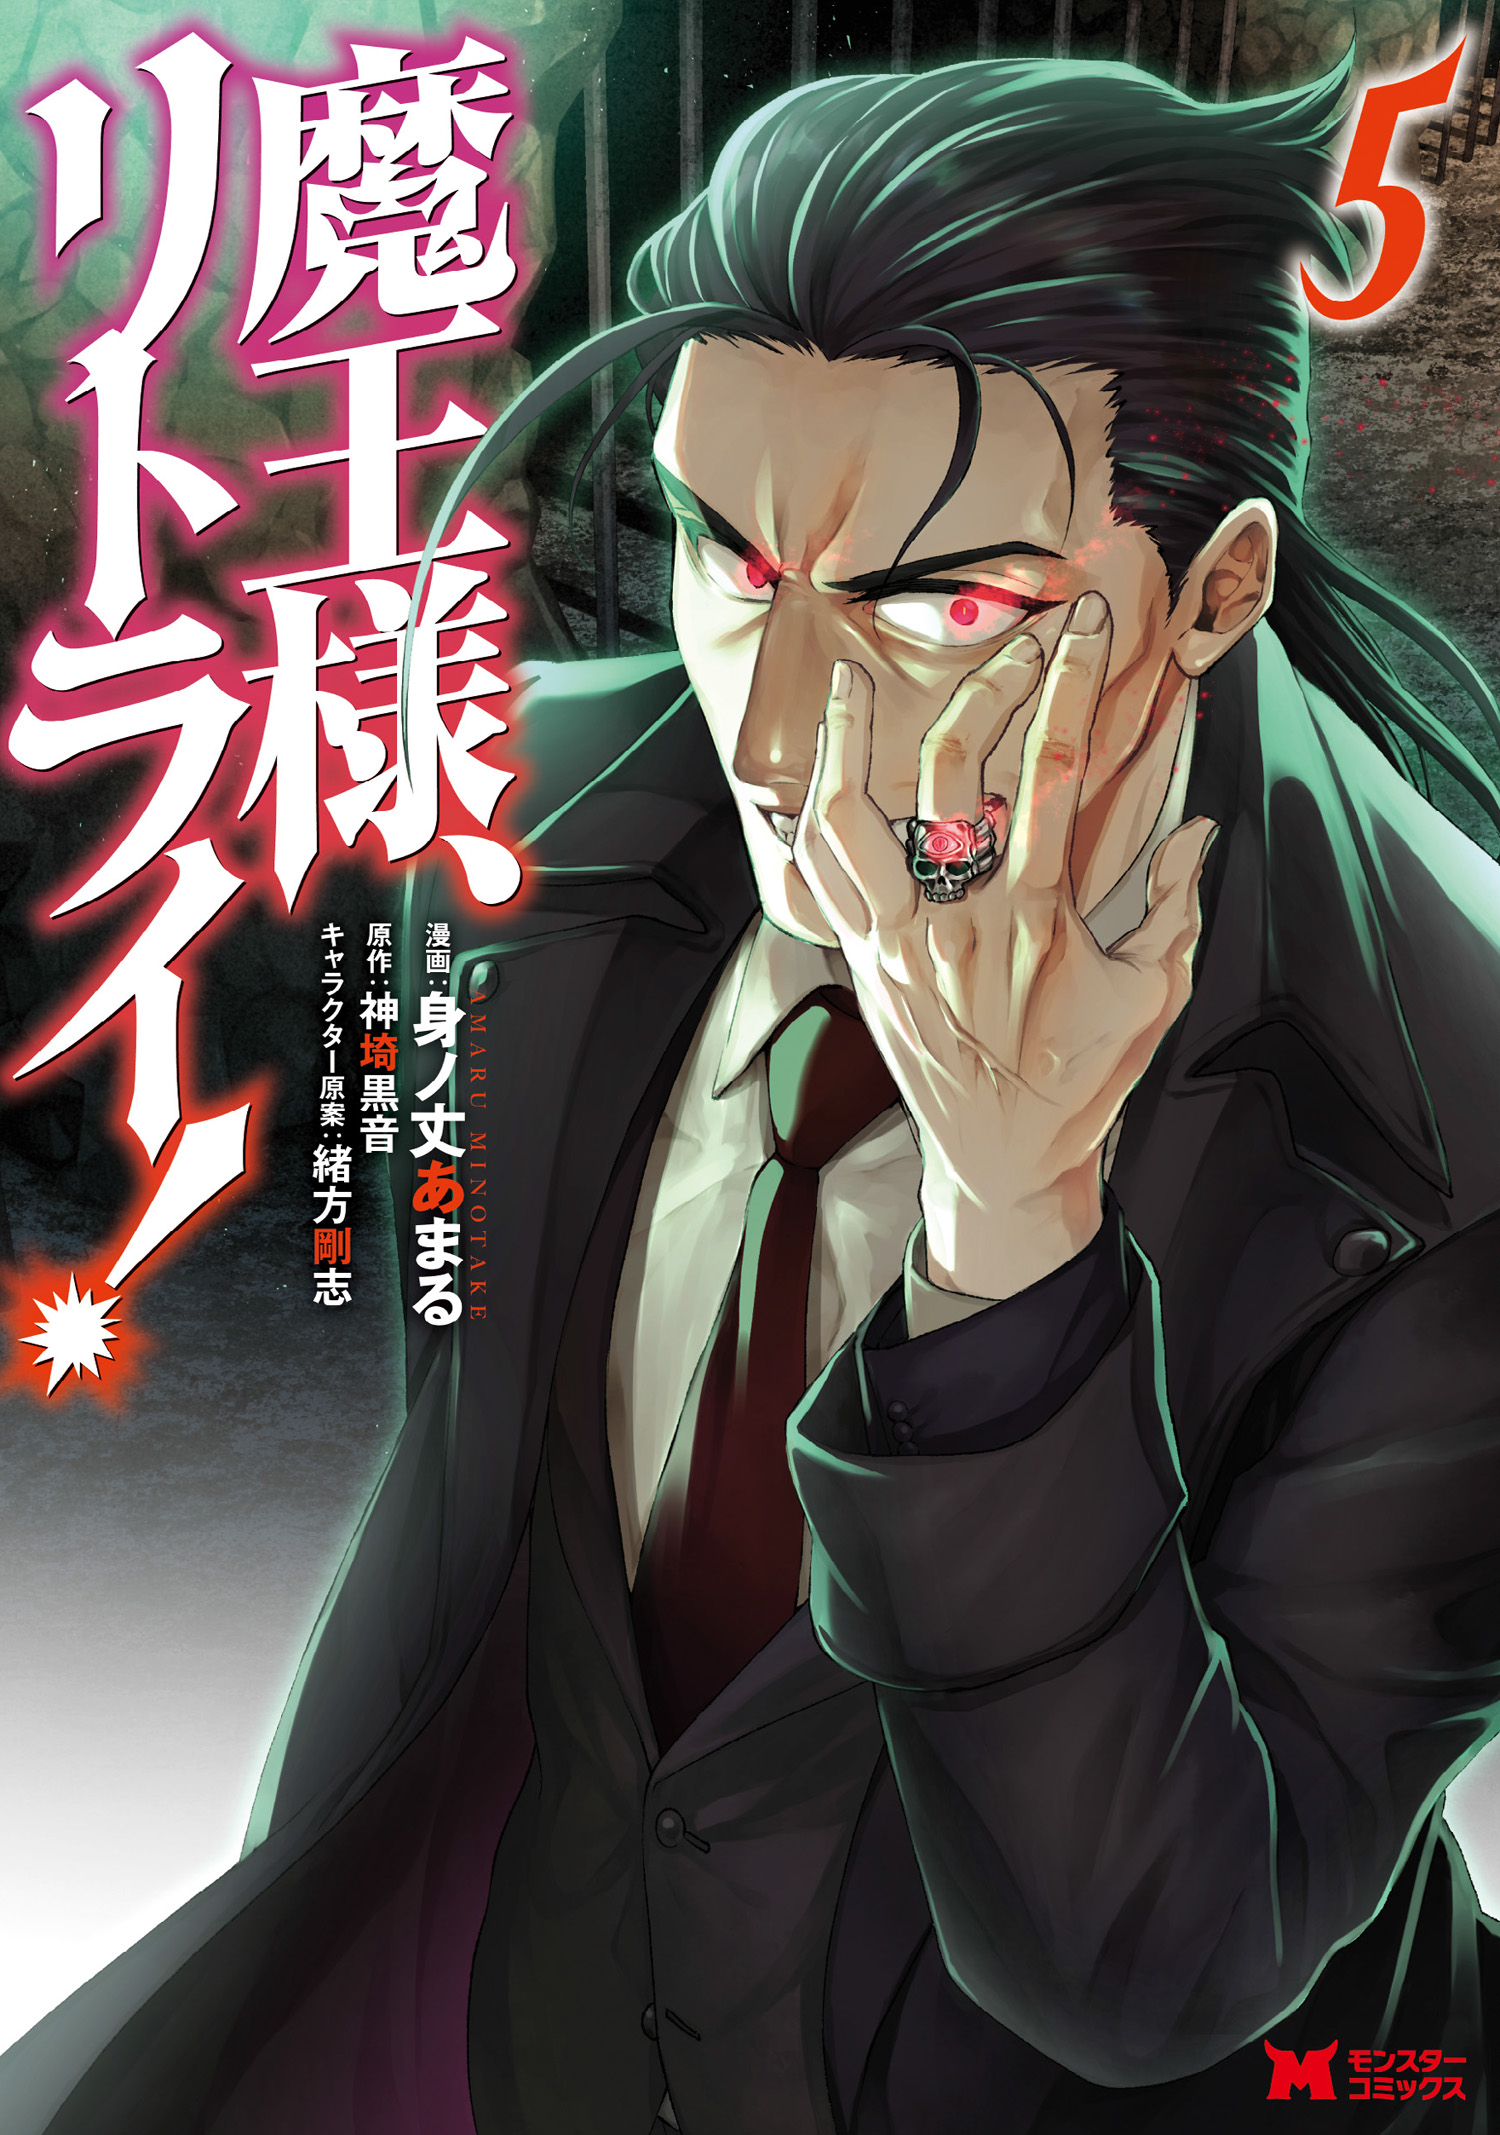 Manga Like Demon Lord, Retry!